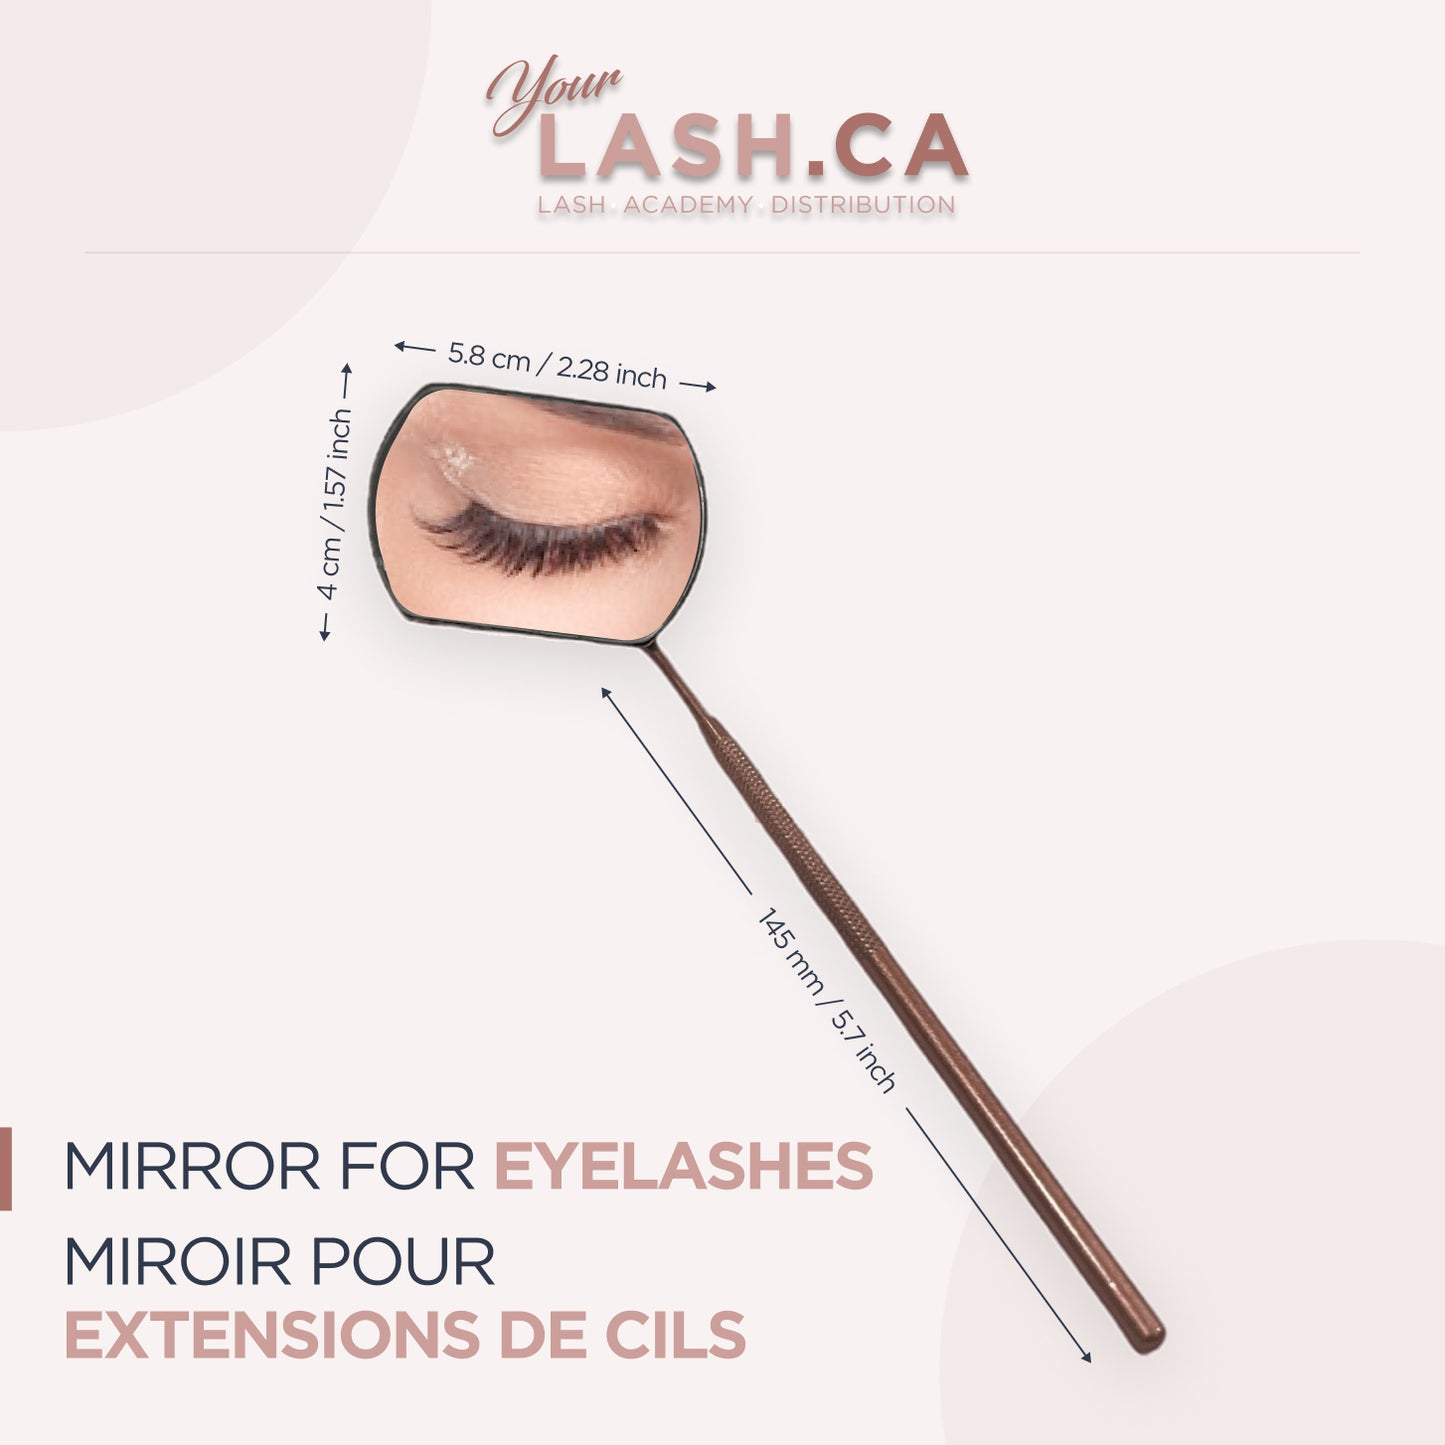 Mirror for eyelash extensions